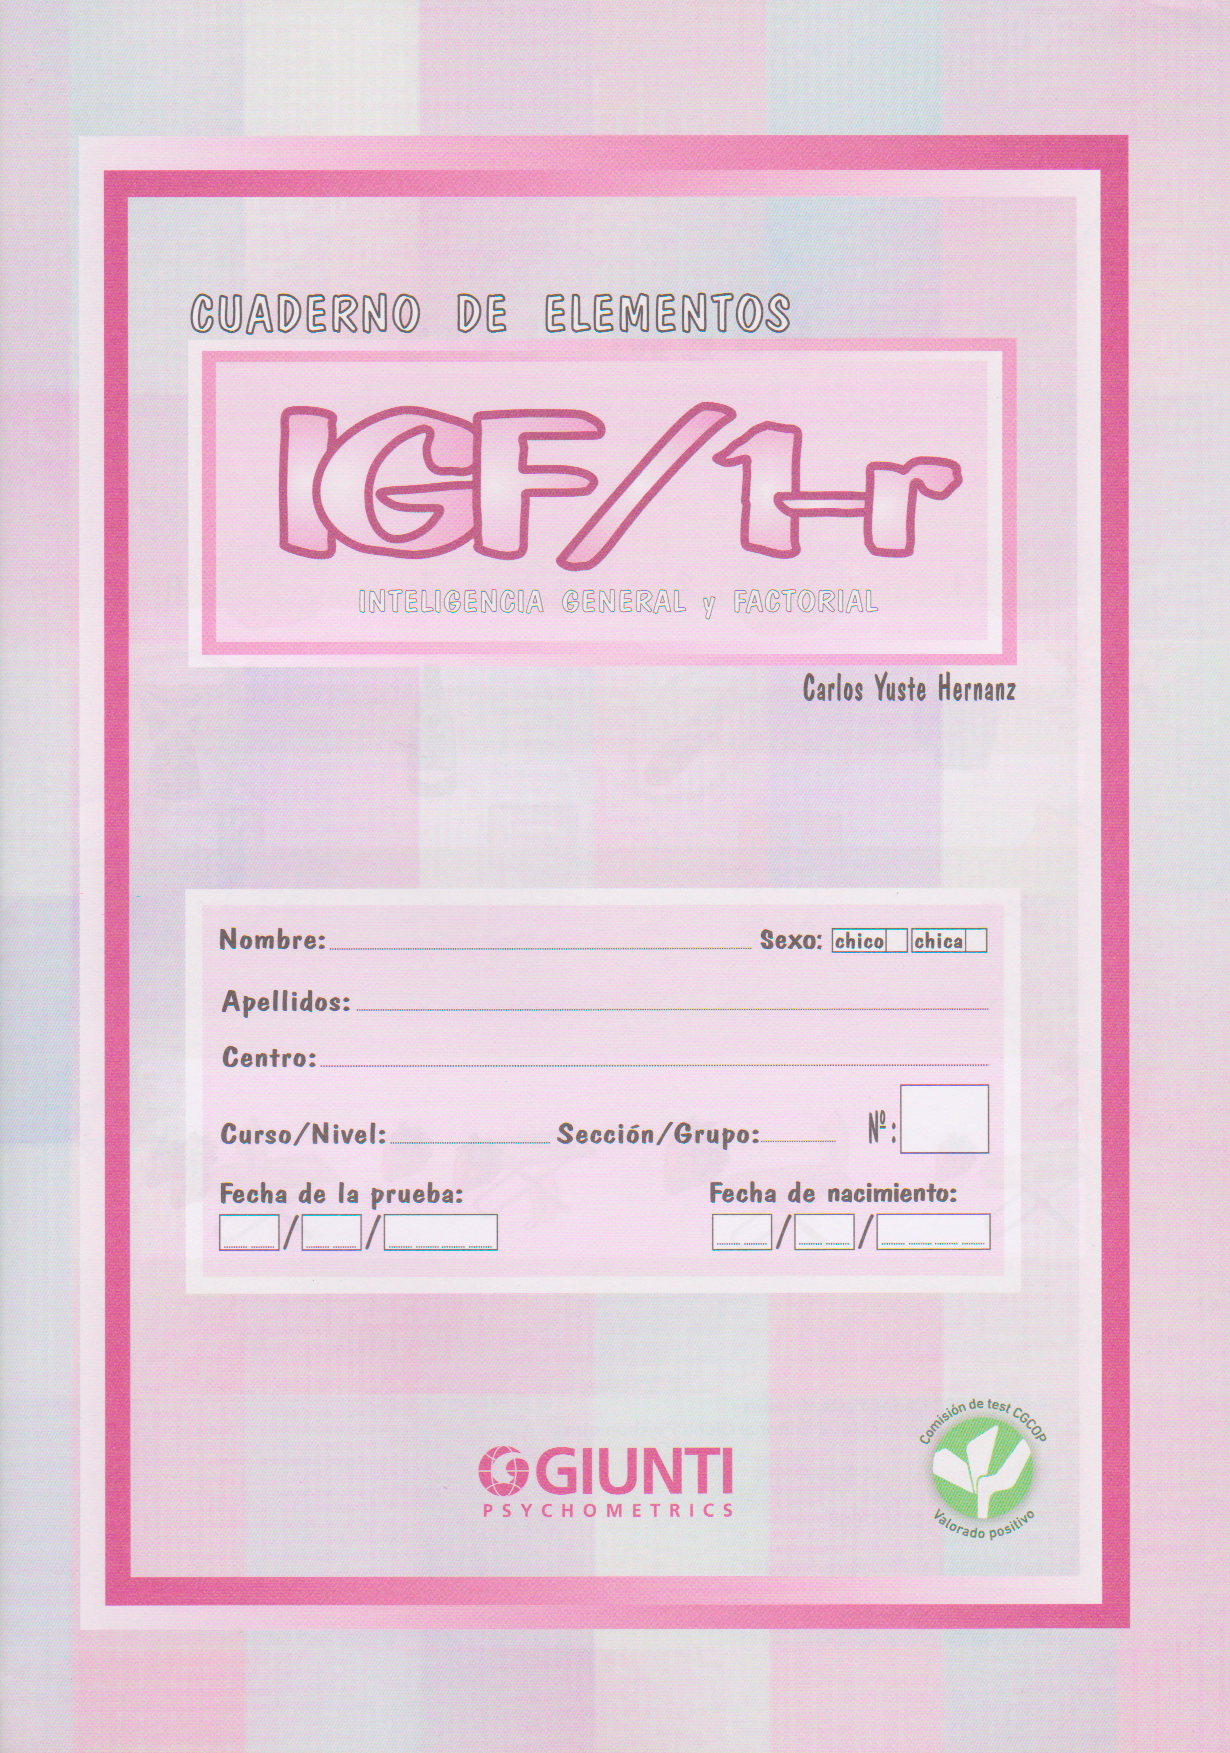 CuadernoElementos-IGF-1